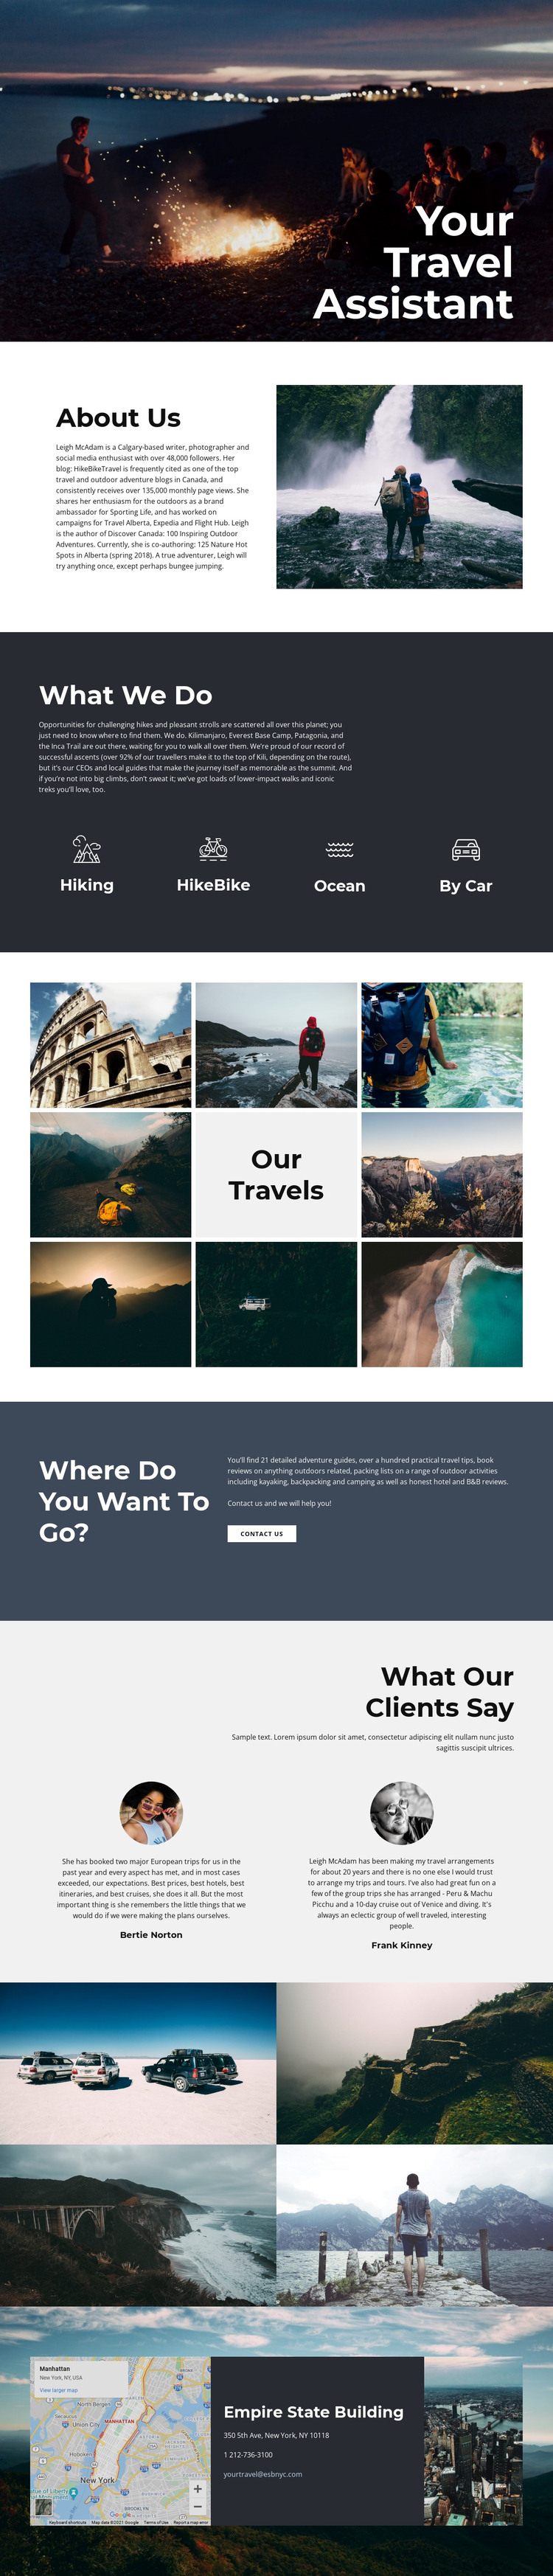 Travel Assistant Web Design